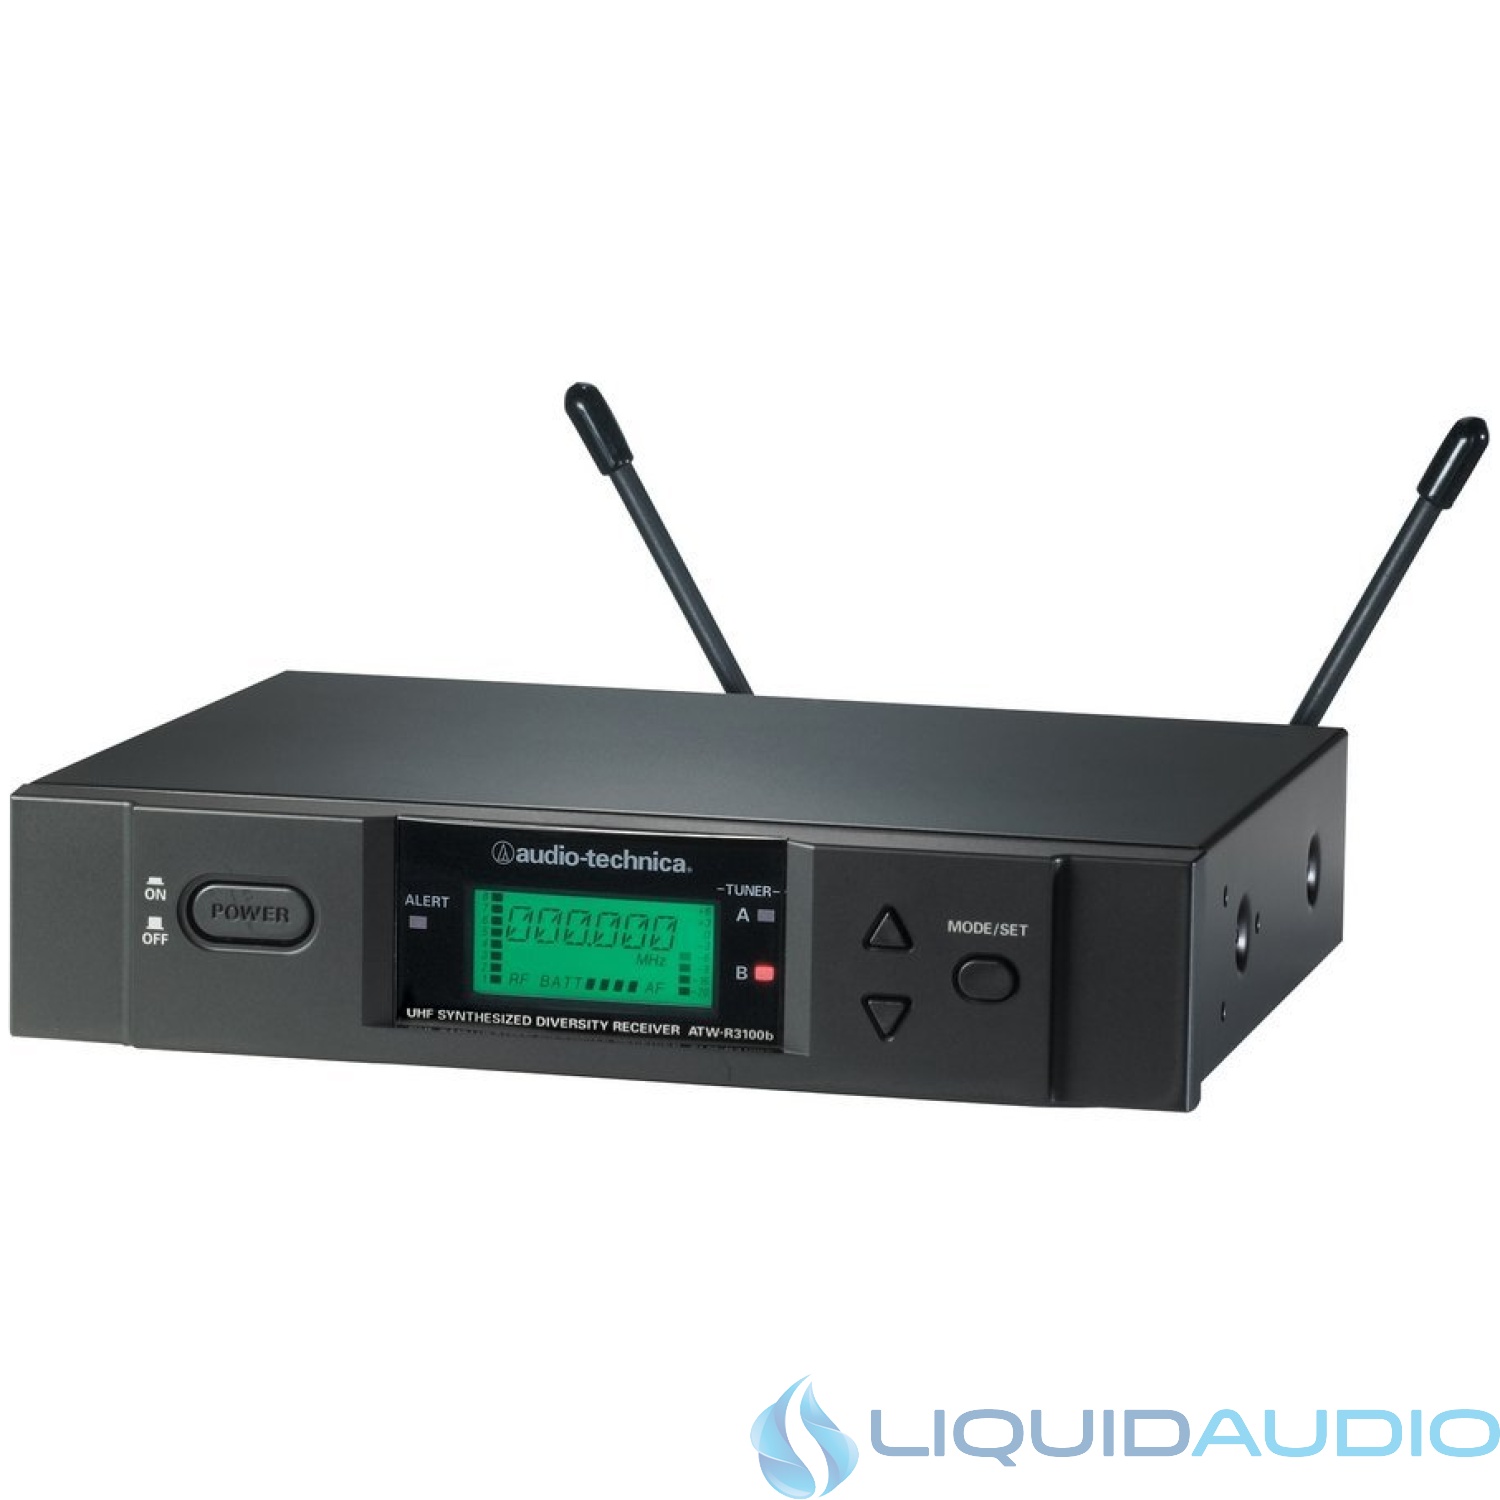 Audio-Technica 3000 Series Wireless Receiver Channel D ATW-R3100b